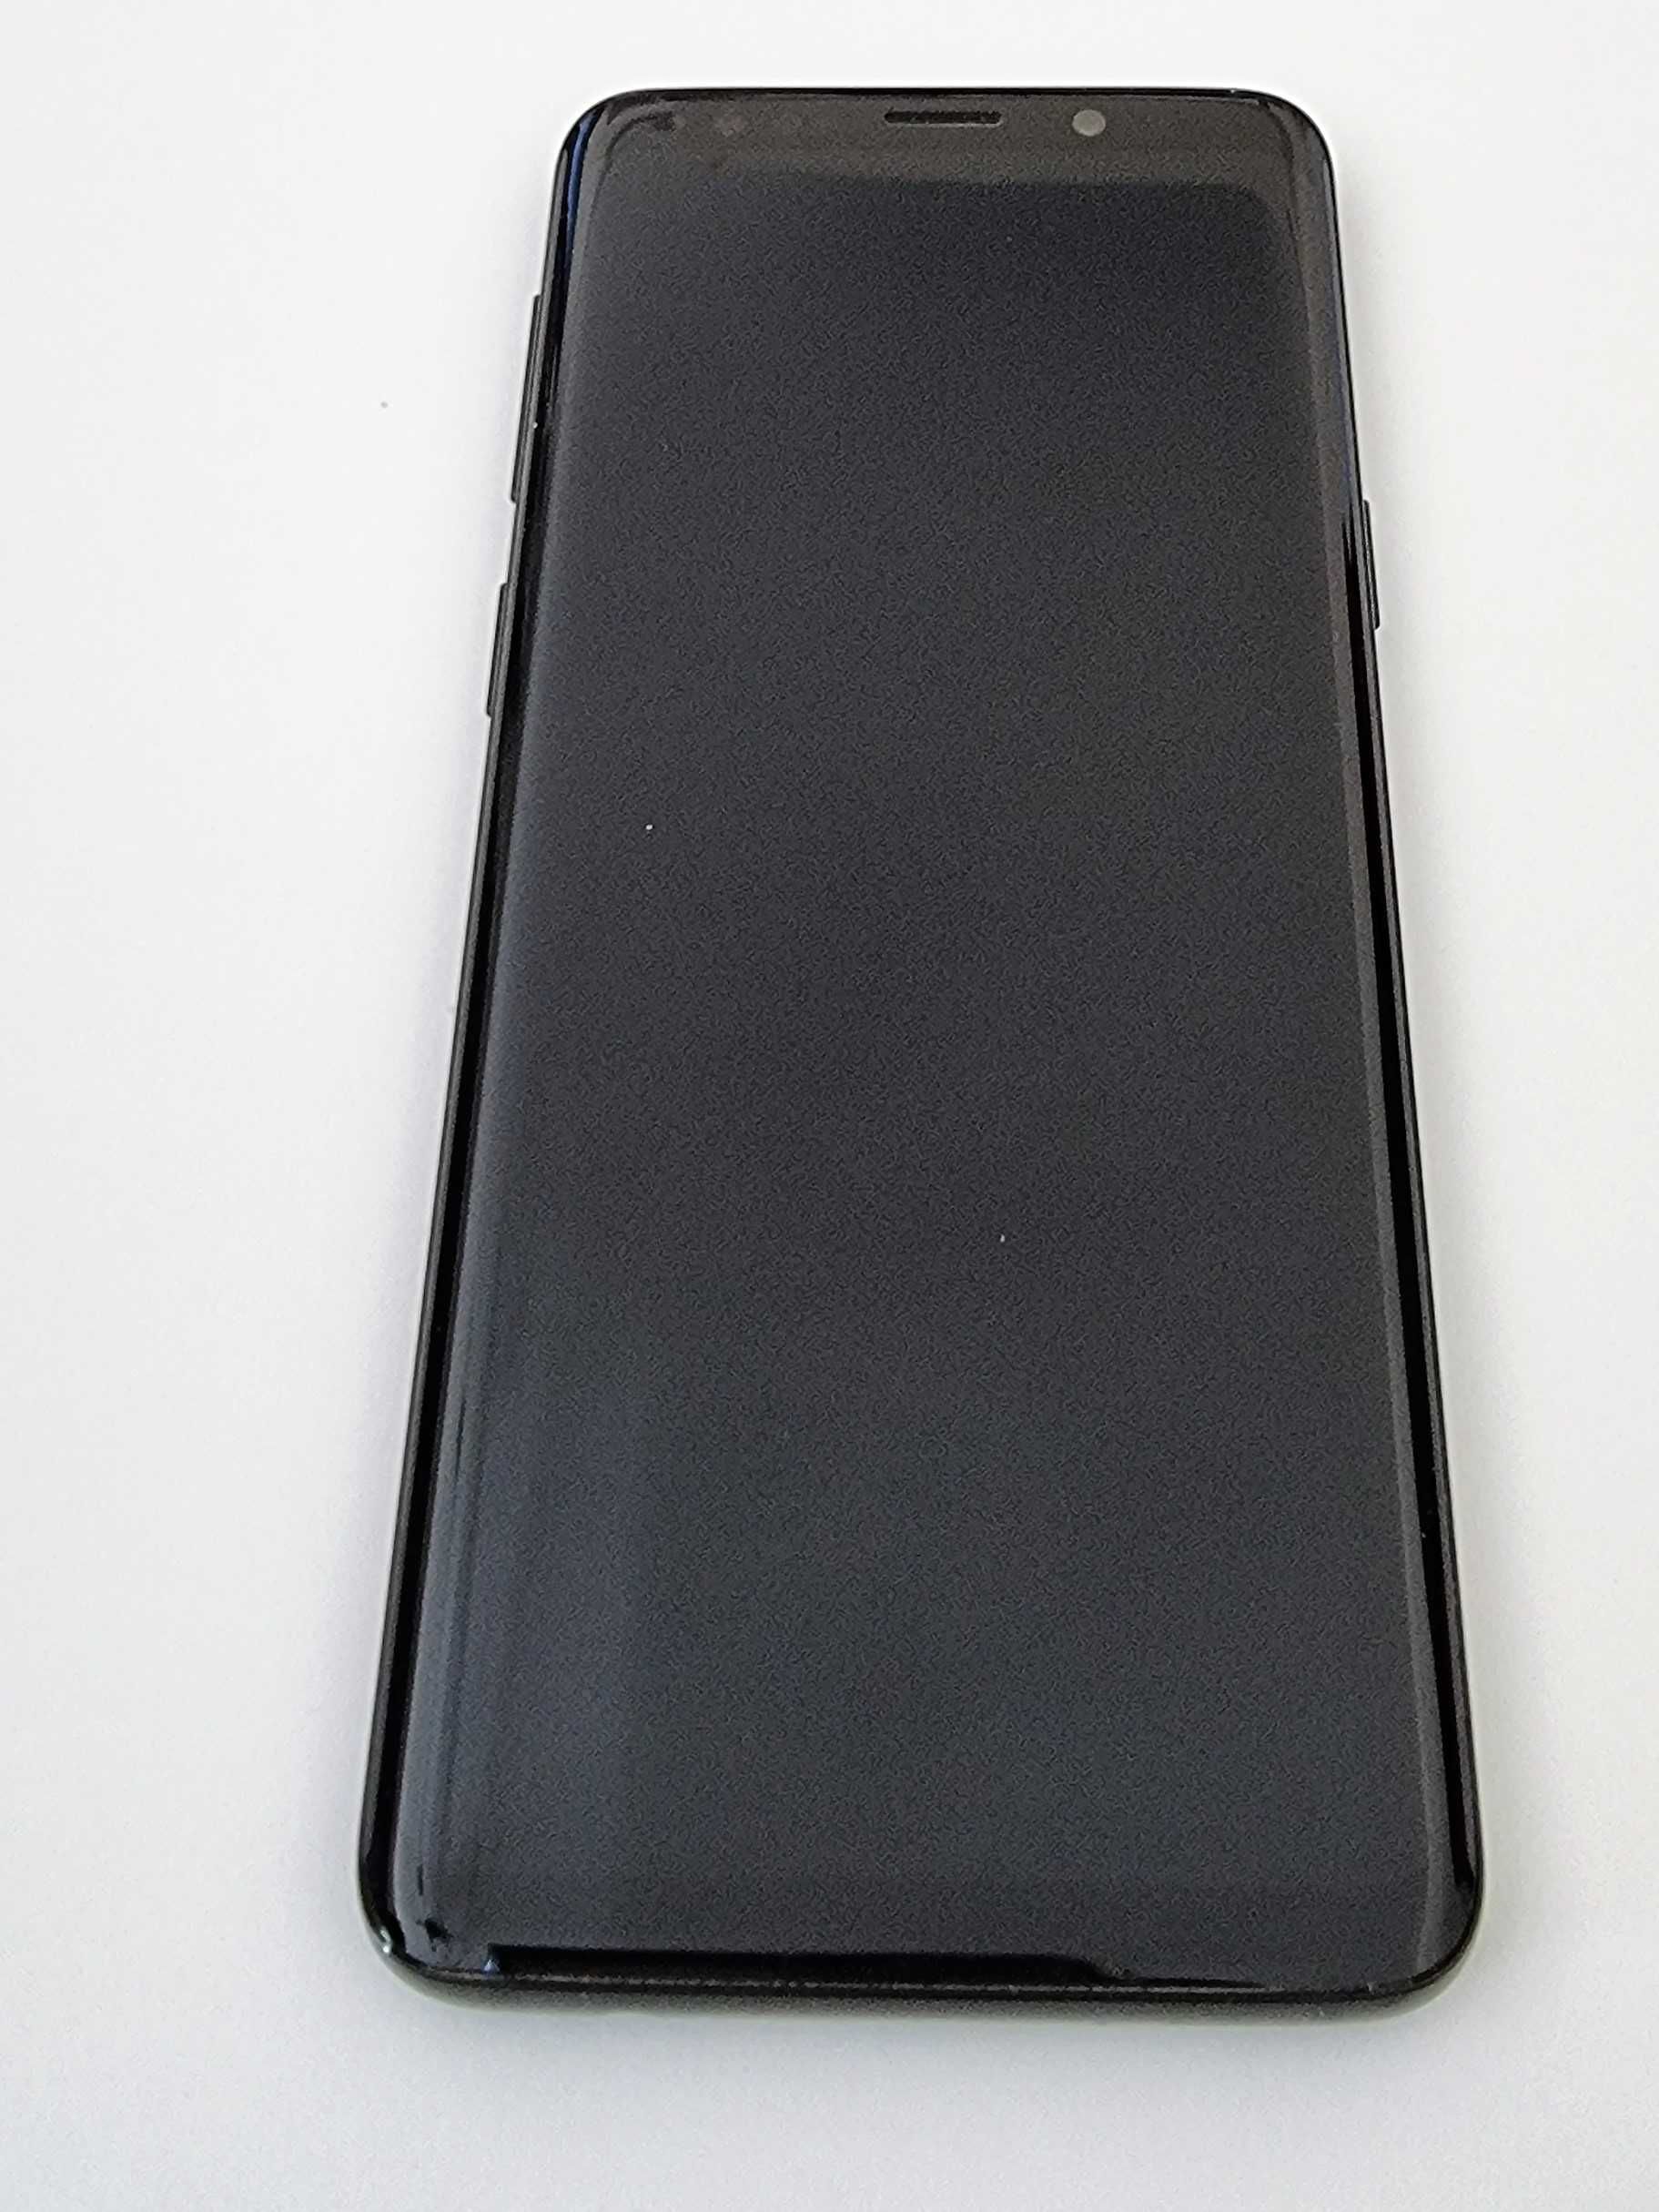 Samsung S9 - 256GB - Dual SIM - Preto (Midnight Black)